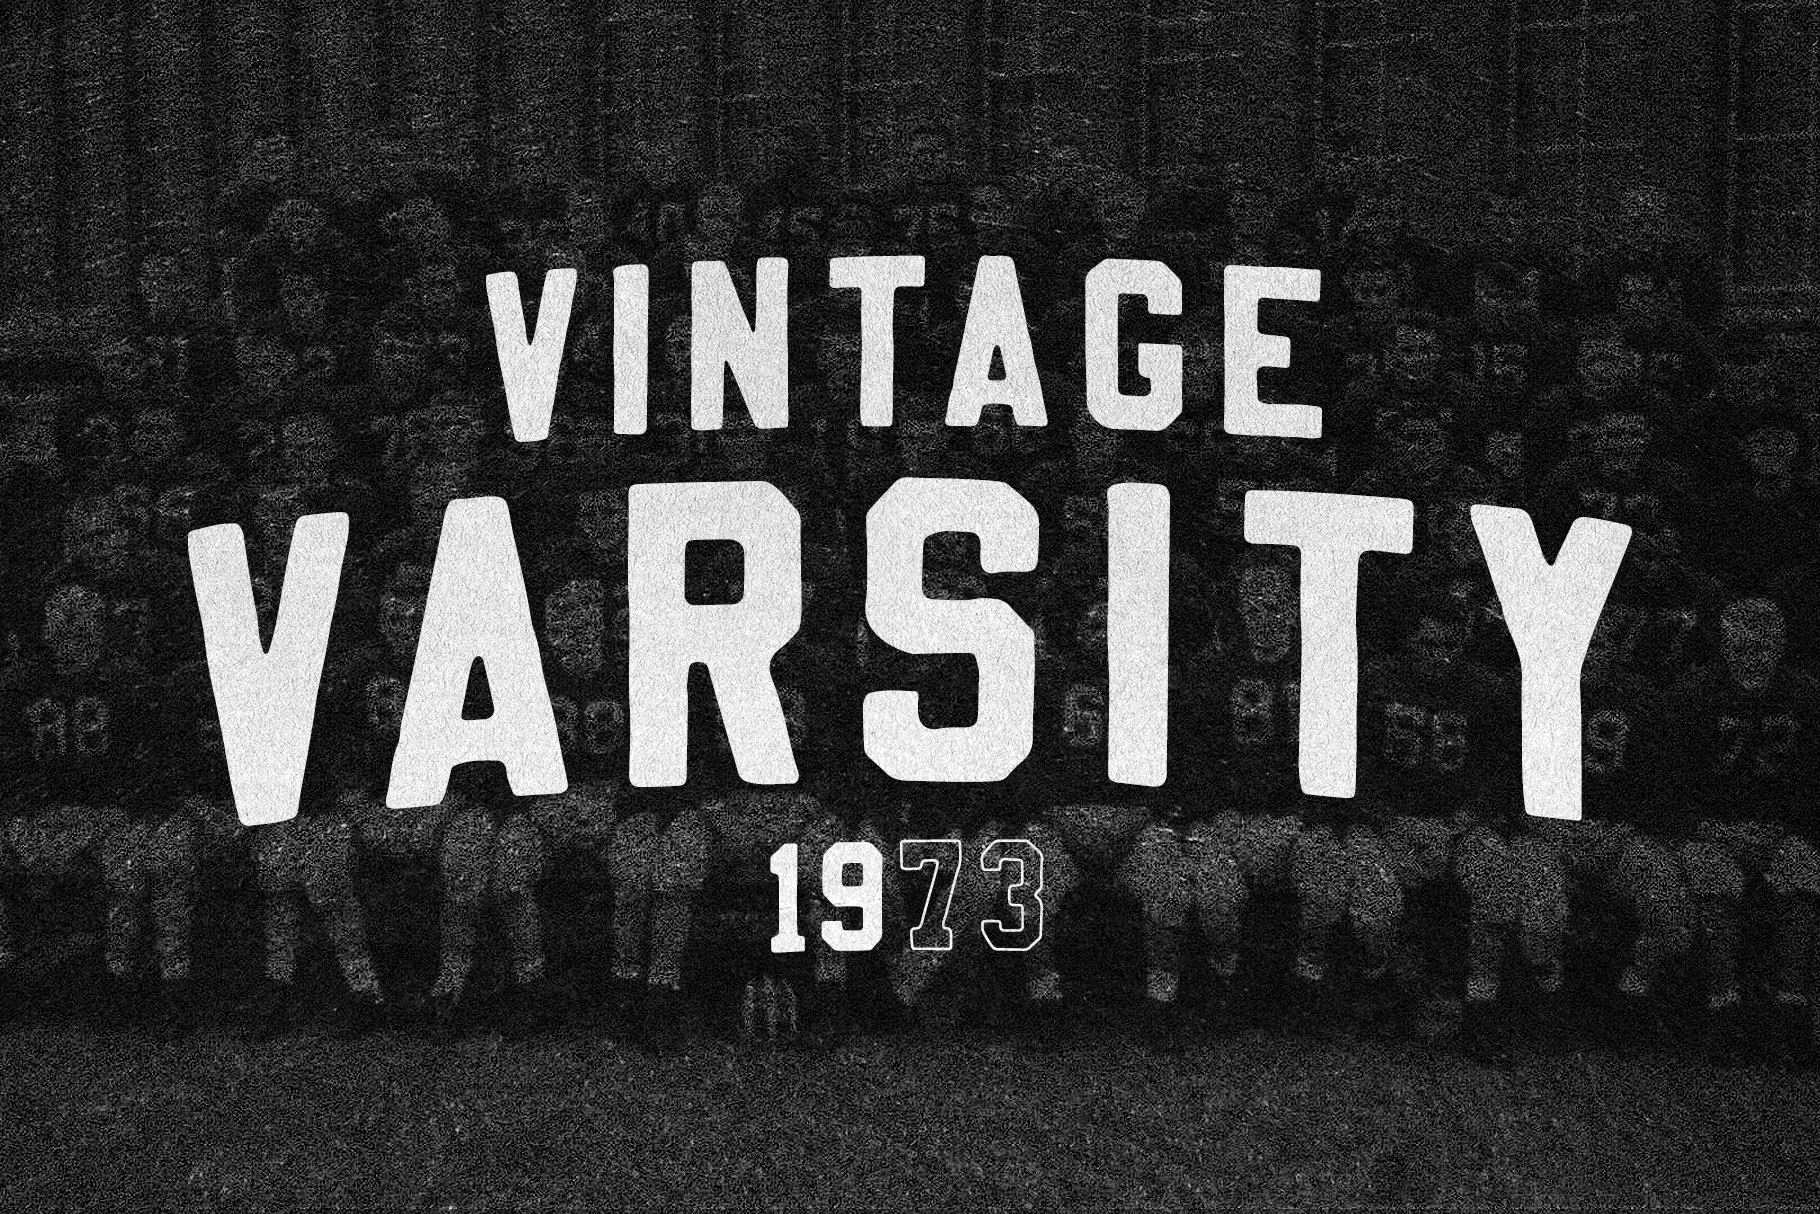 Vintage Varsity cover image.